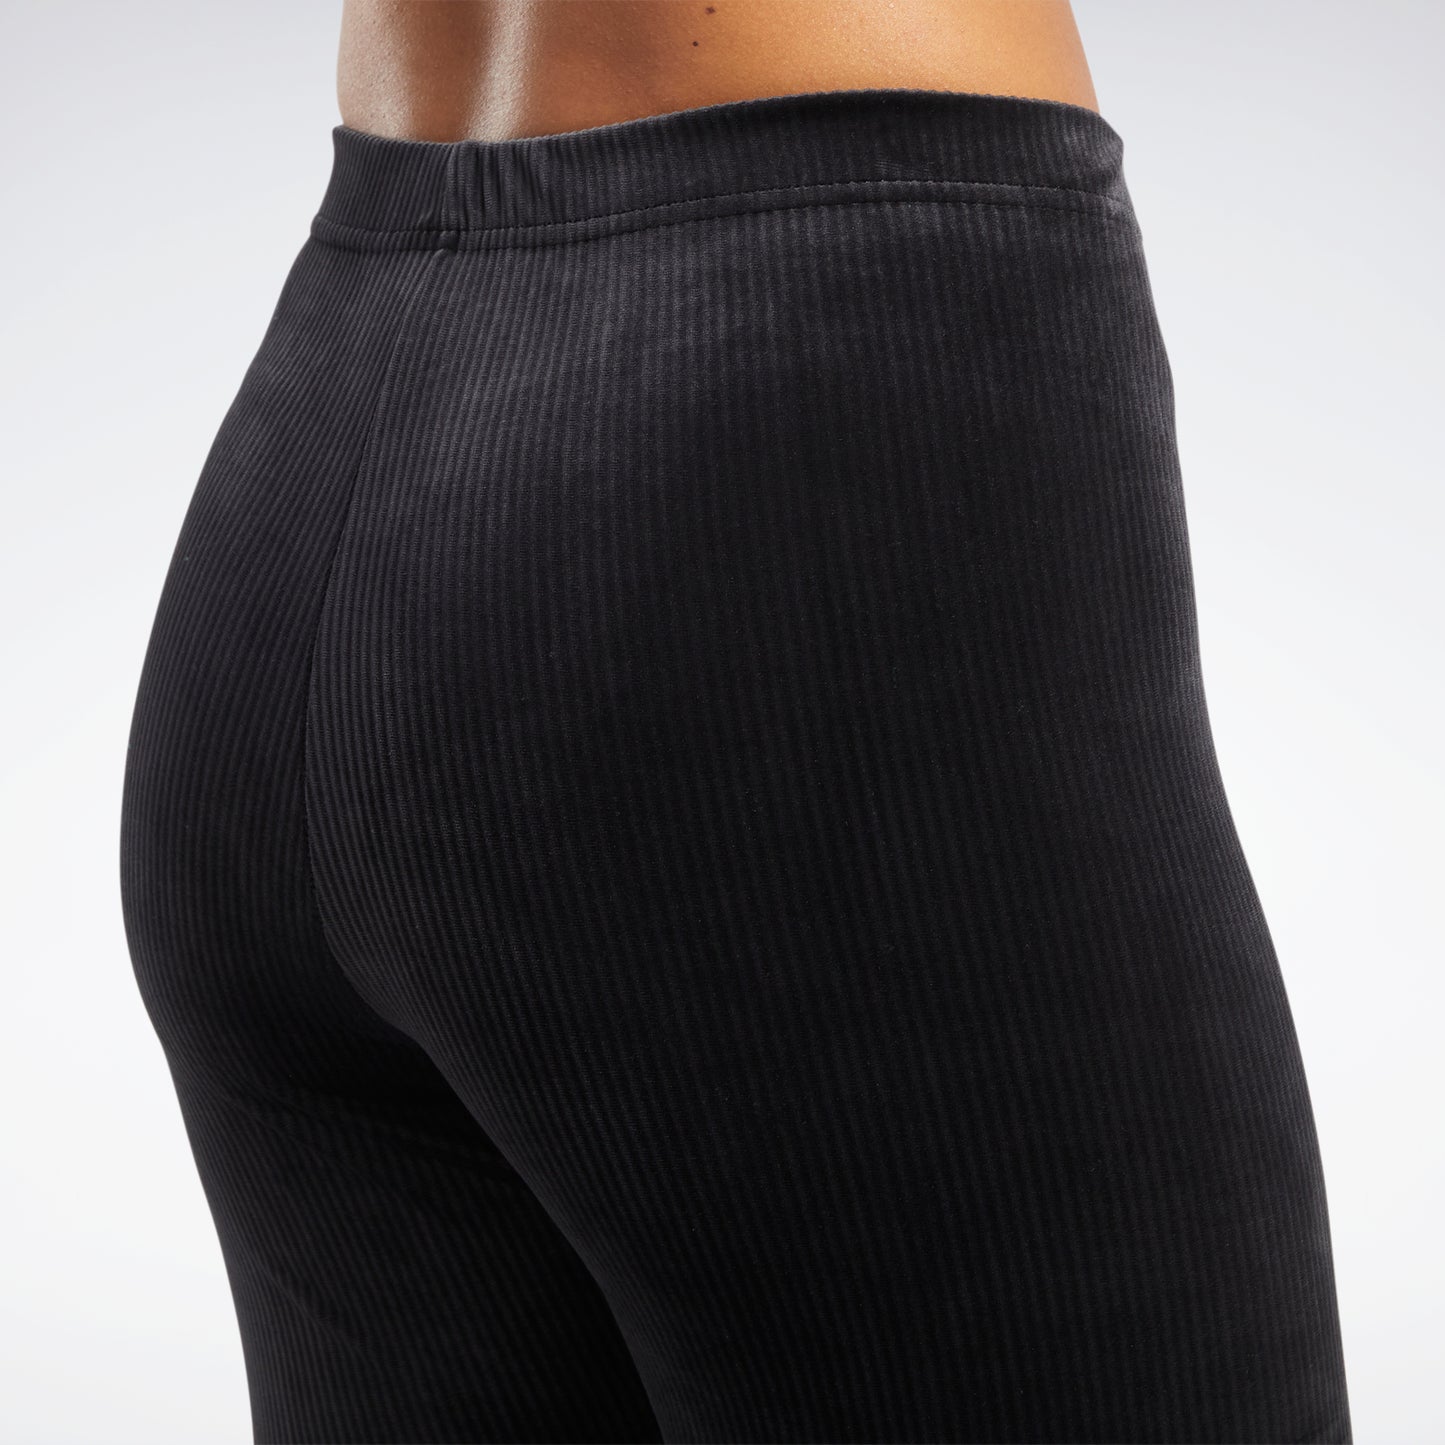 Black crushed velvet leggings  Polehog UK handmade clothing and gym wear